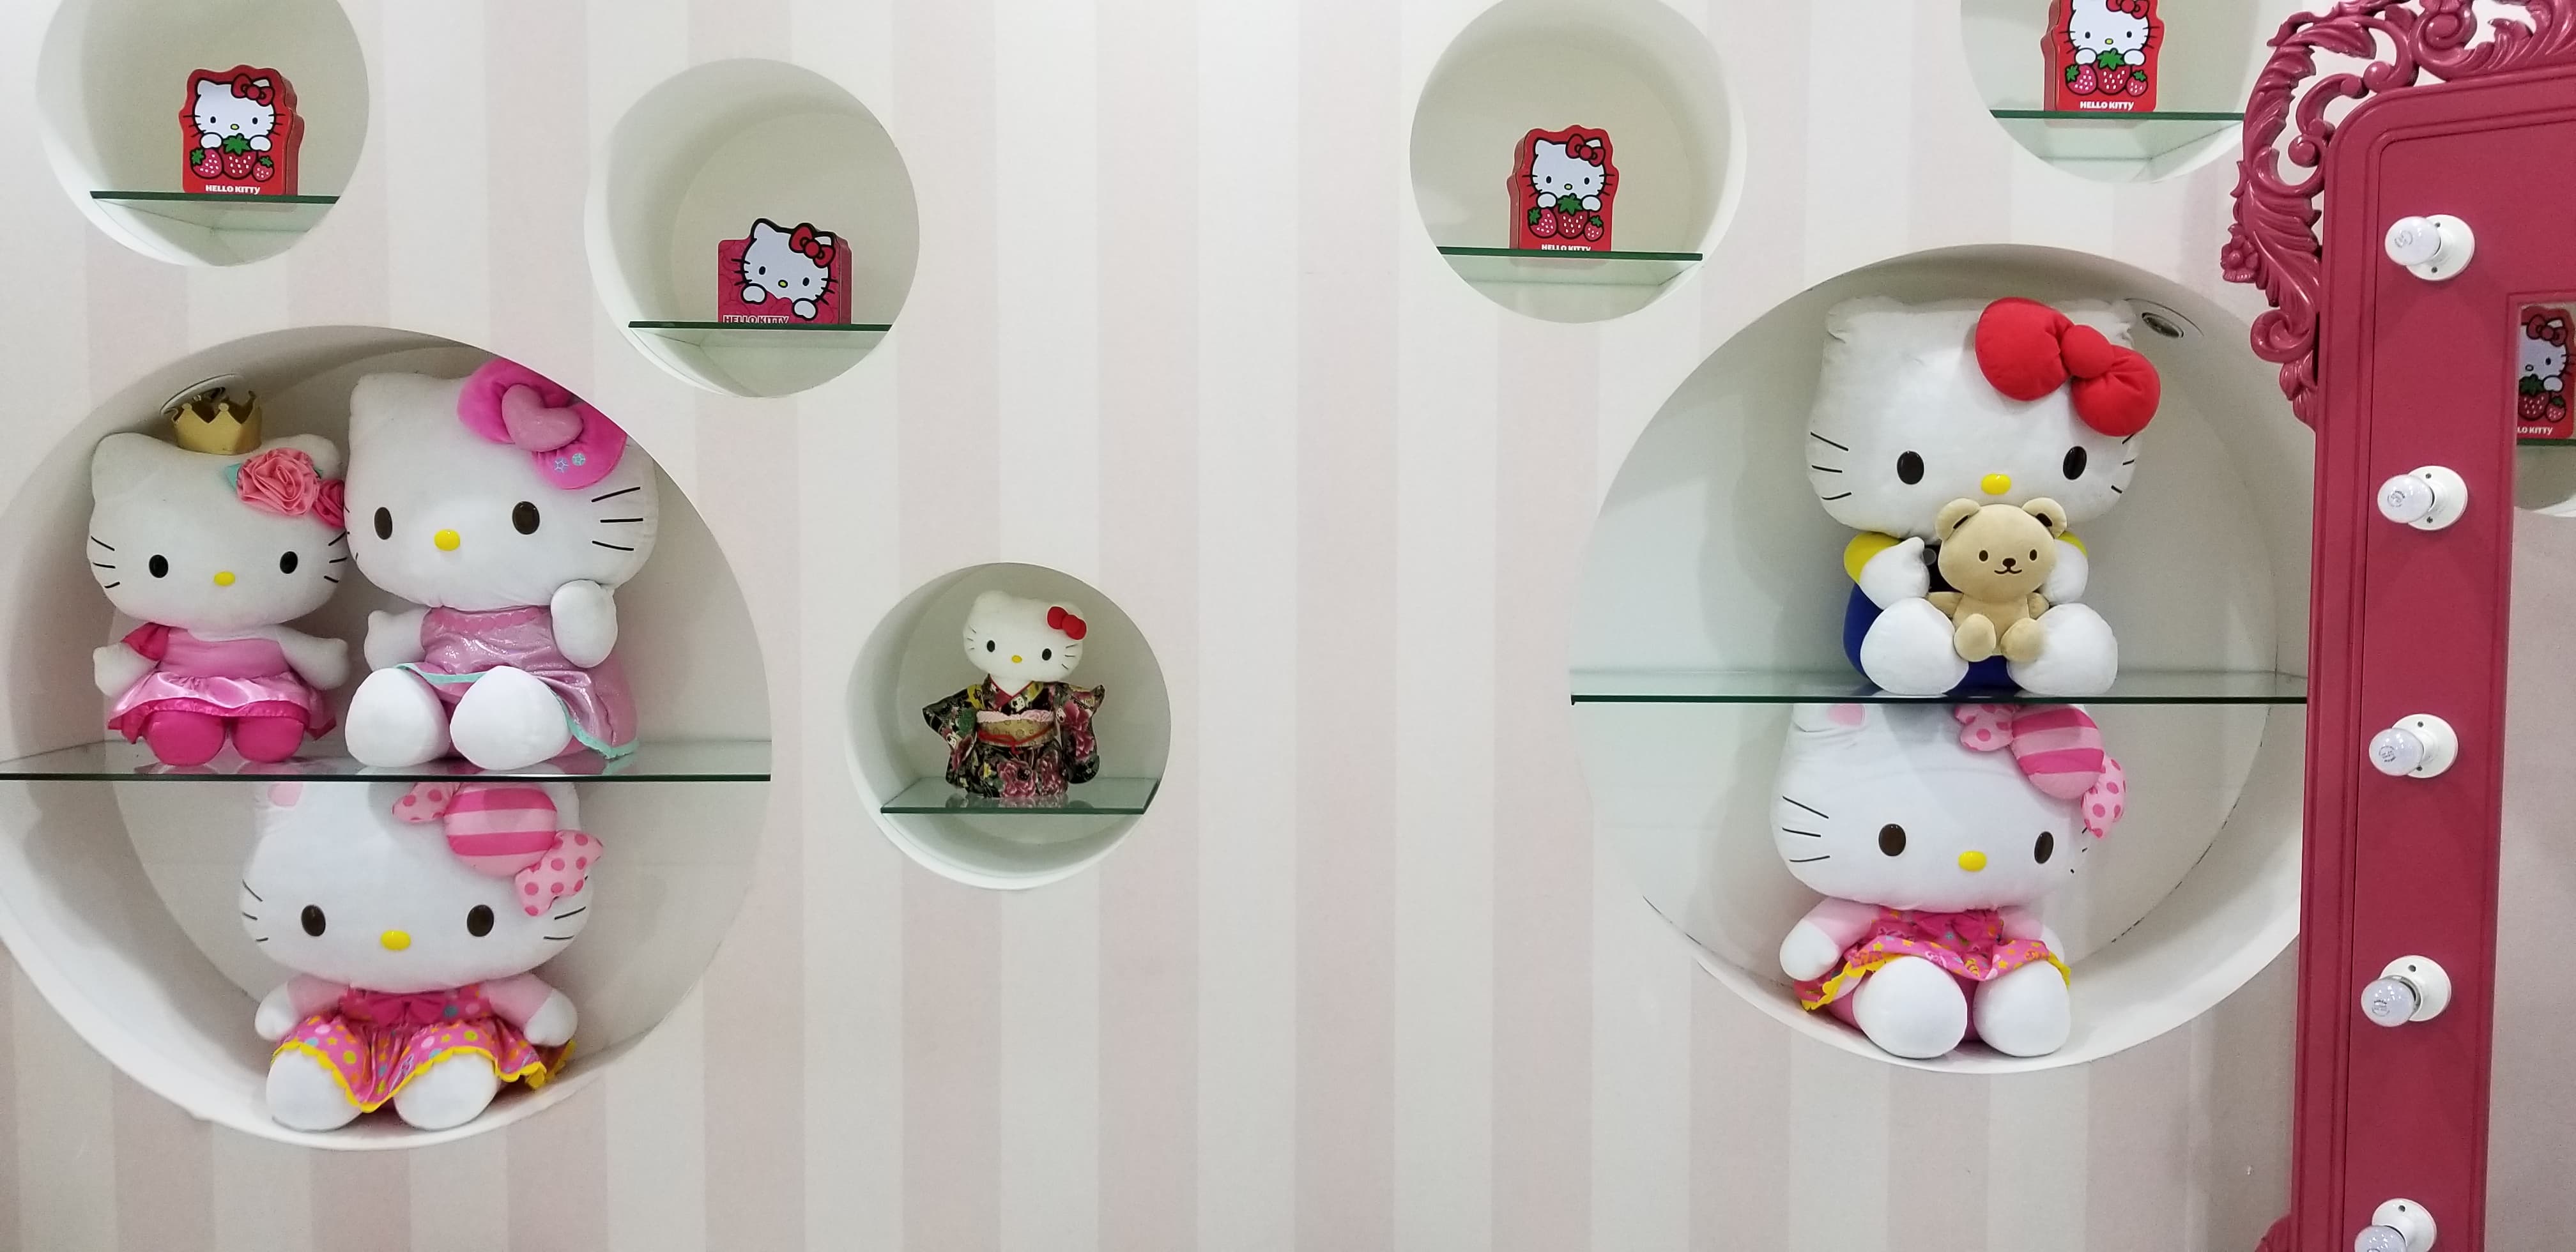 Hello Kitty beauty Spa Dubai – Ladypinkilicious